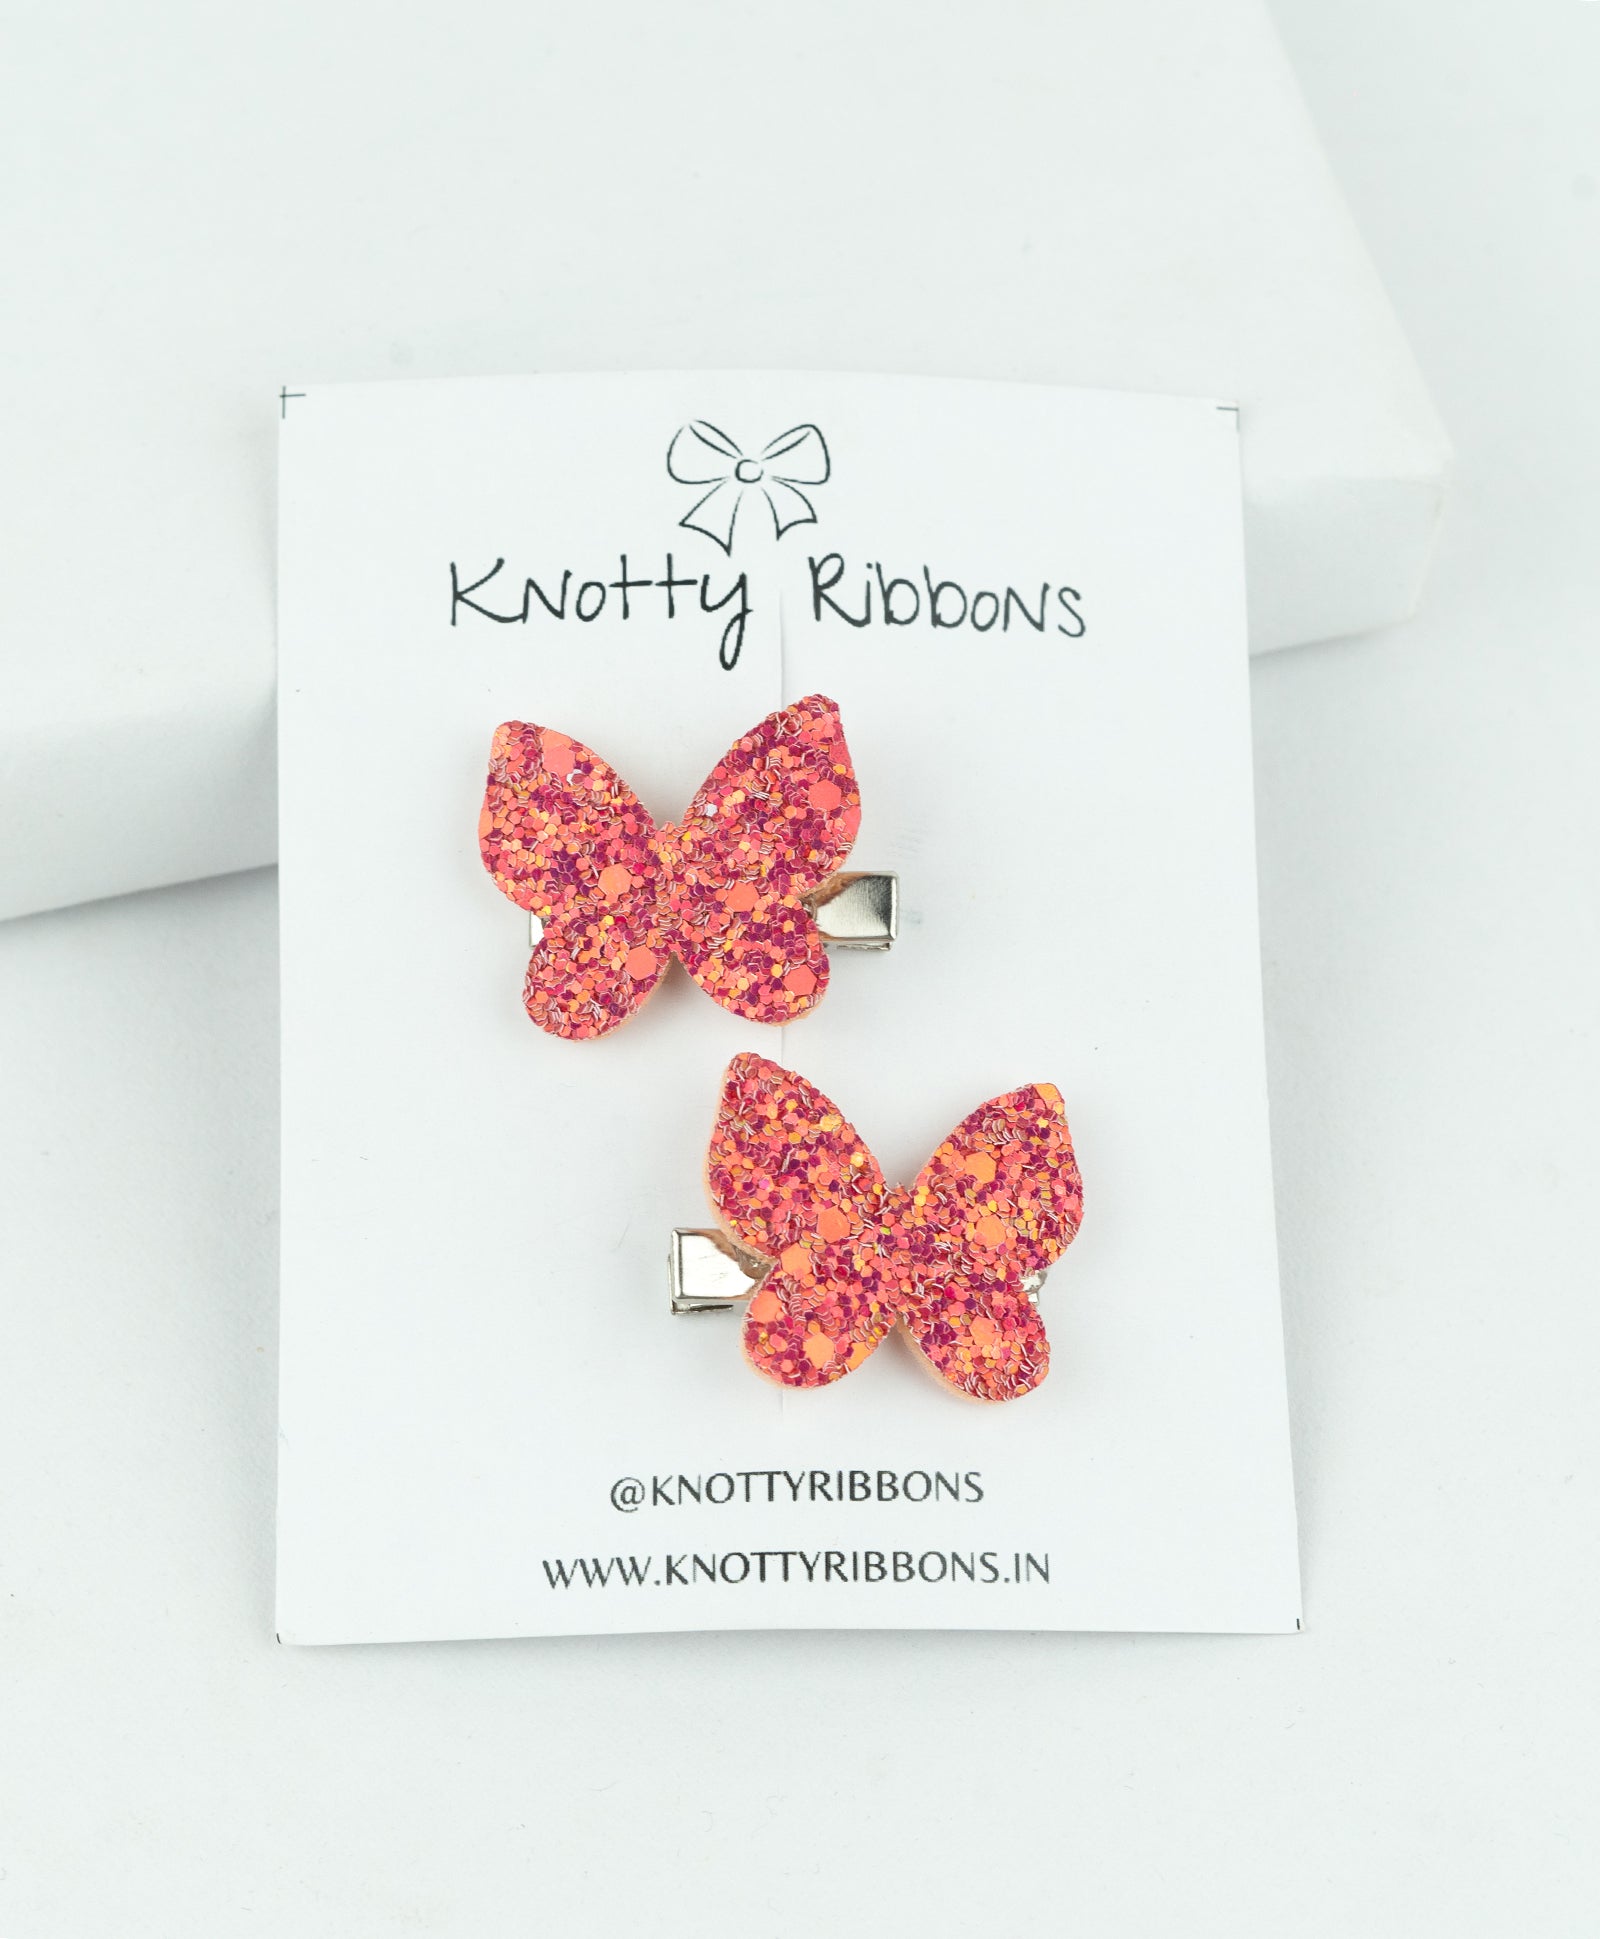 Glitter Butterfly Hair Clips - Dark Pink